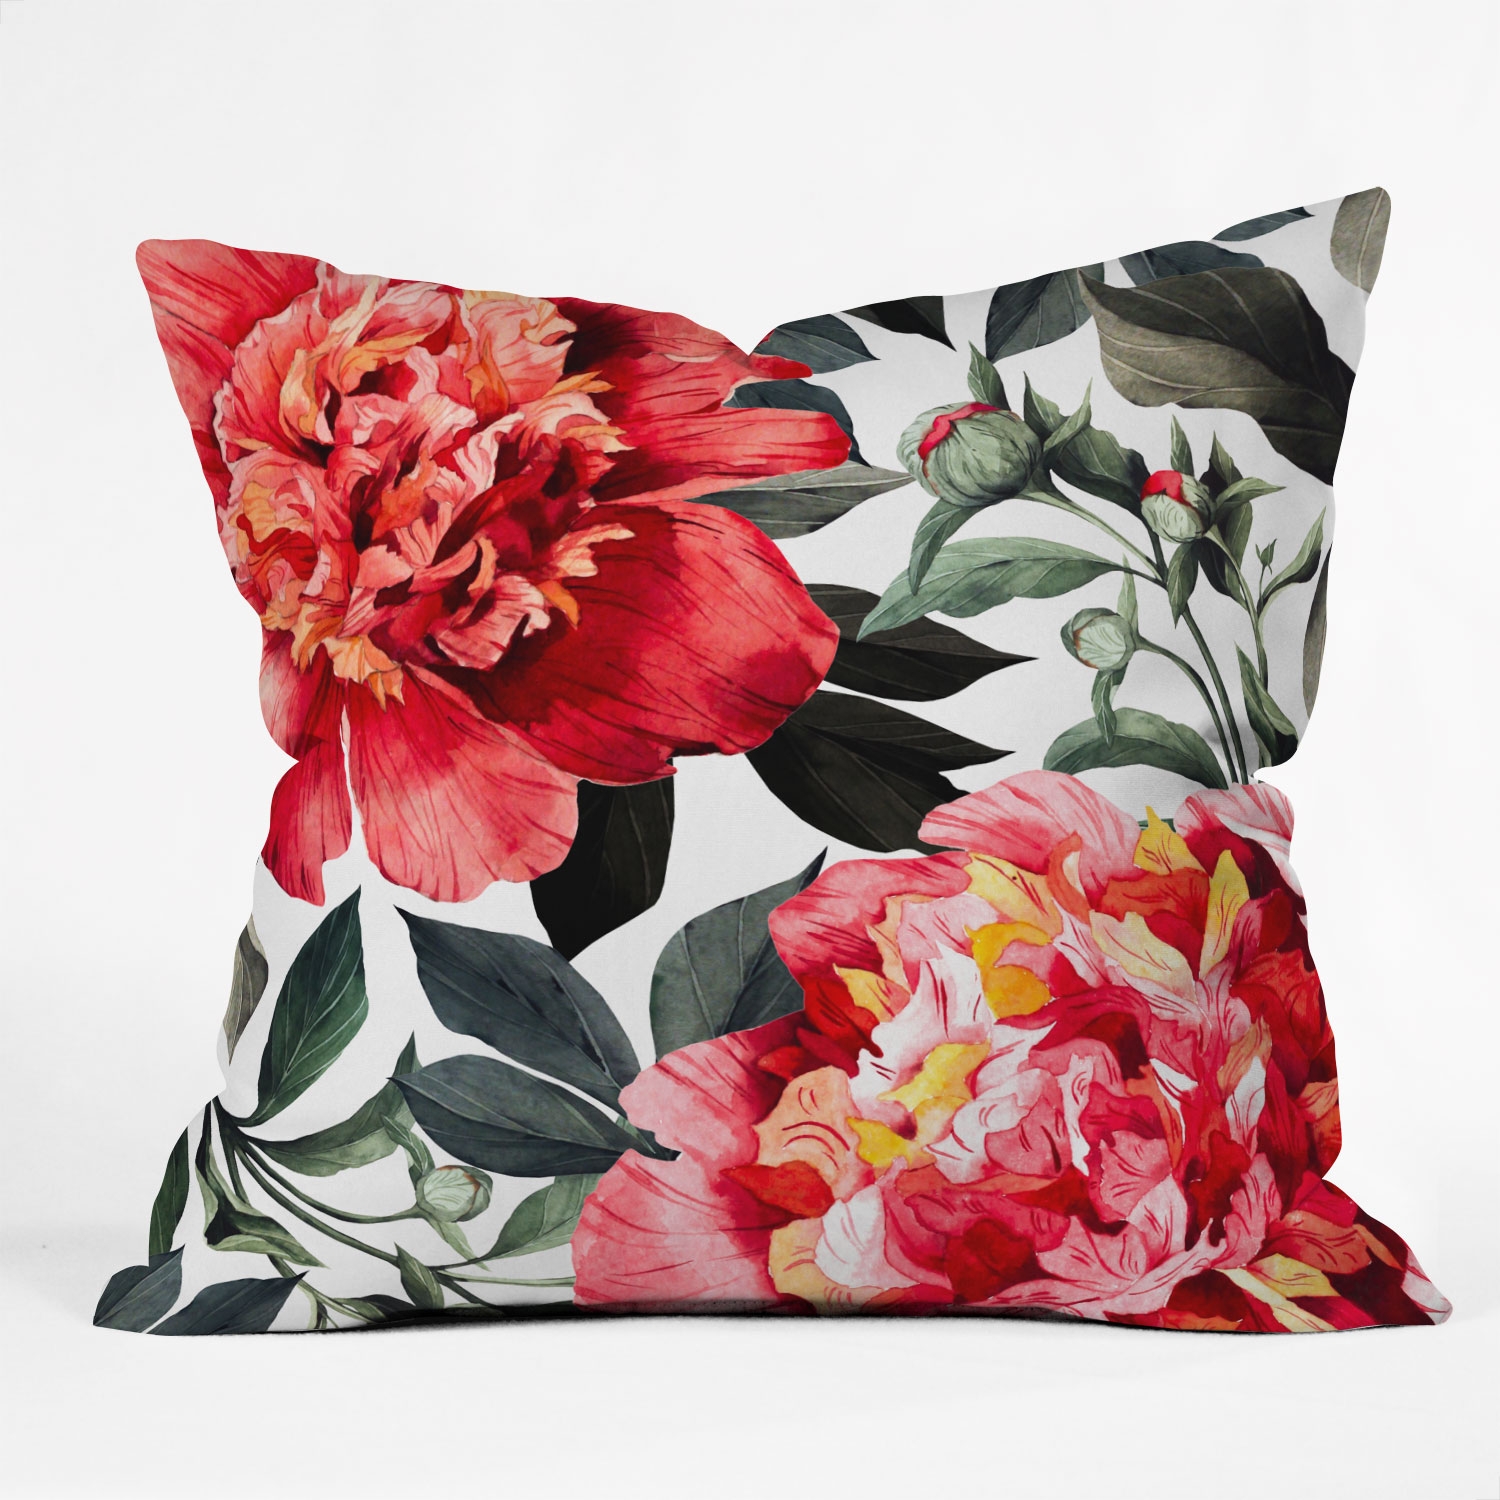 Big Red Watercolor Flowers by Marta Barragan Camarasa - Outdoor Throw Pillow 16" x 16" - Image 1